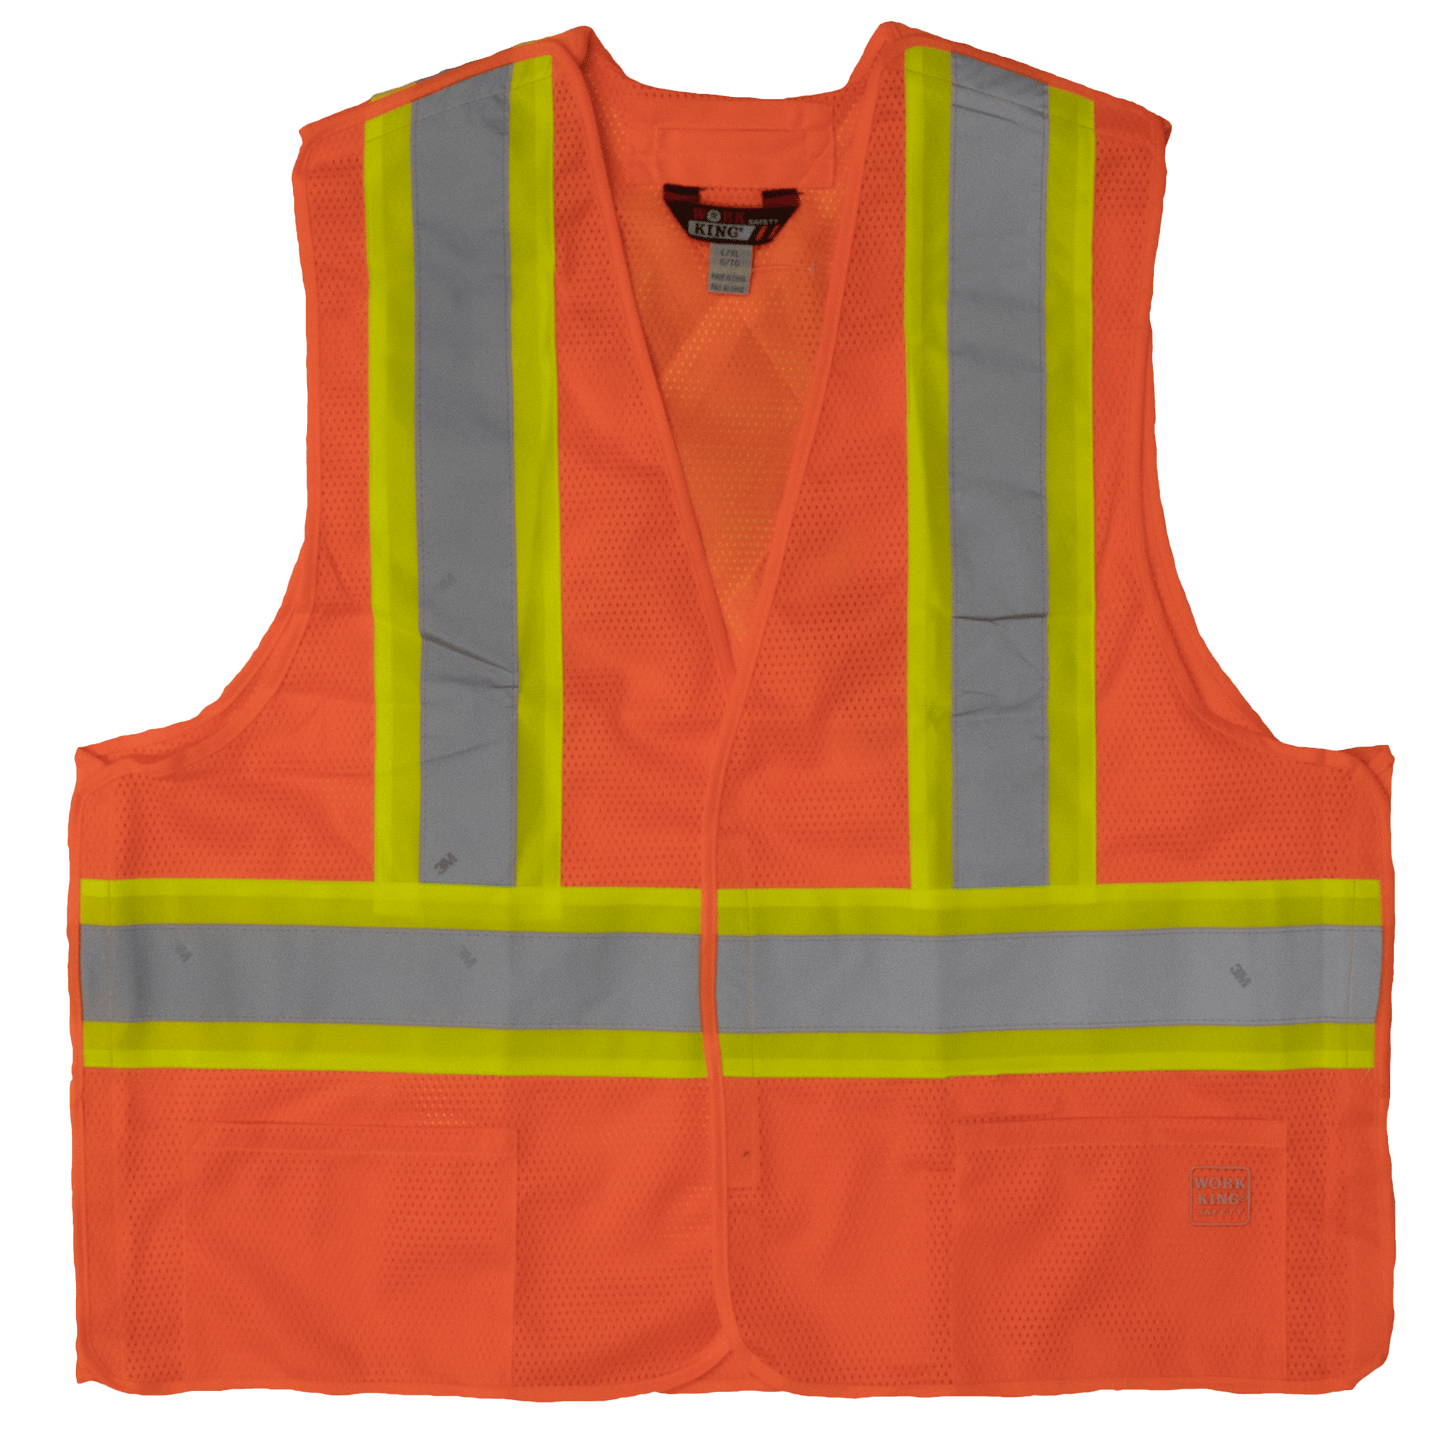 5-Point Tearaway Safety Vest S9i0